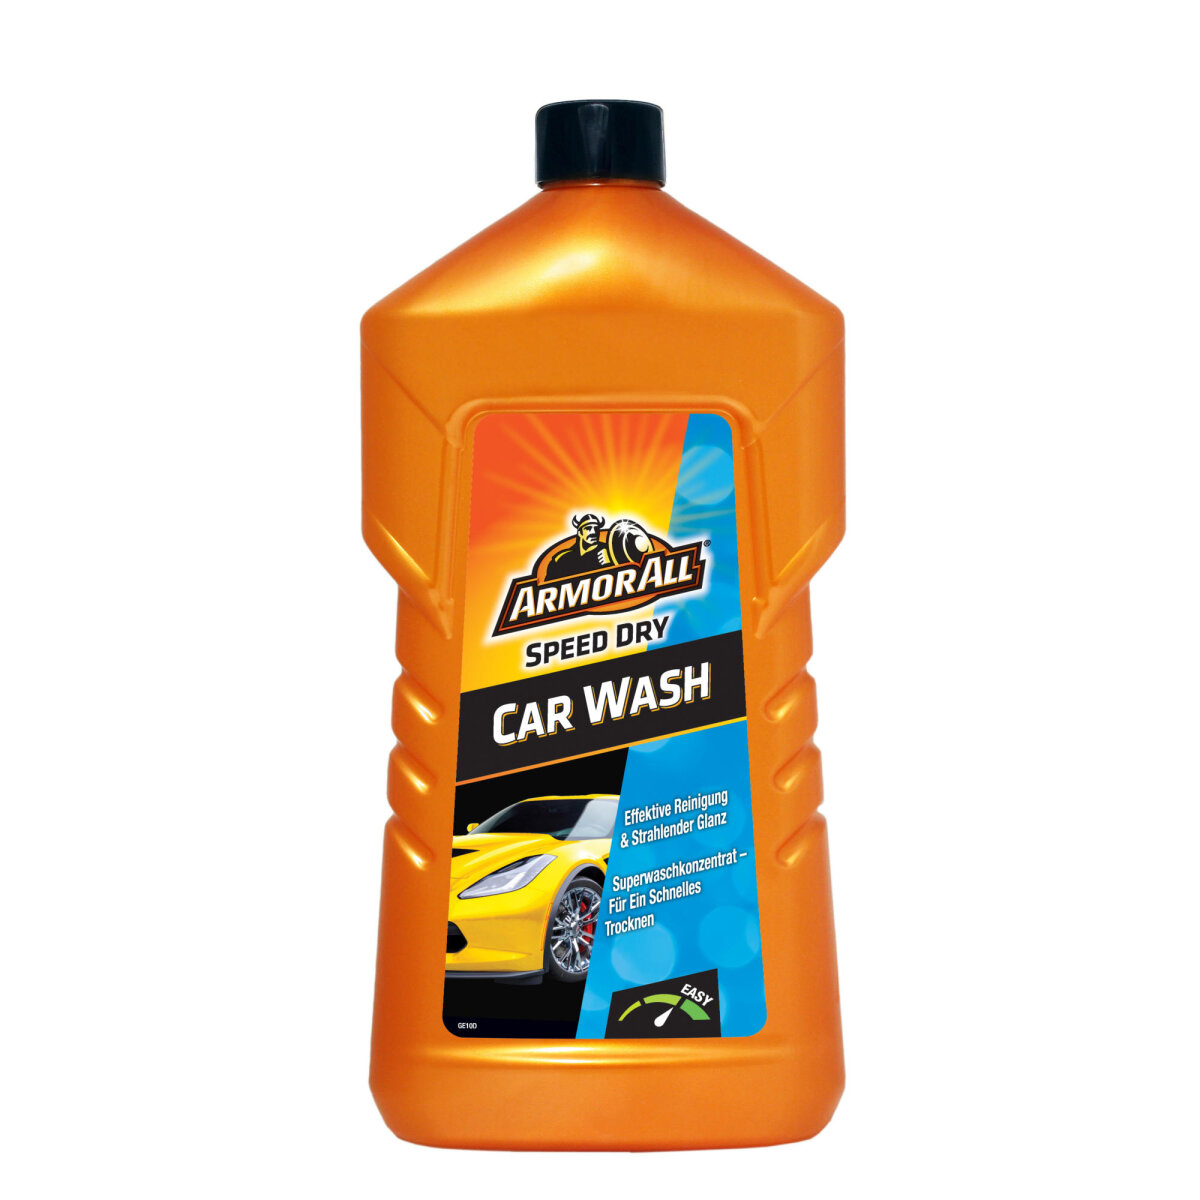 NOVADUR Autoshampoo Wash & Wax 25 kg - Kanister online kaufen